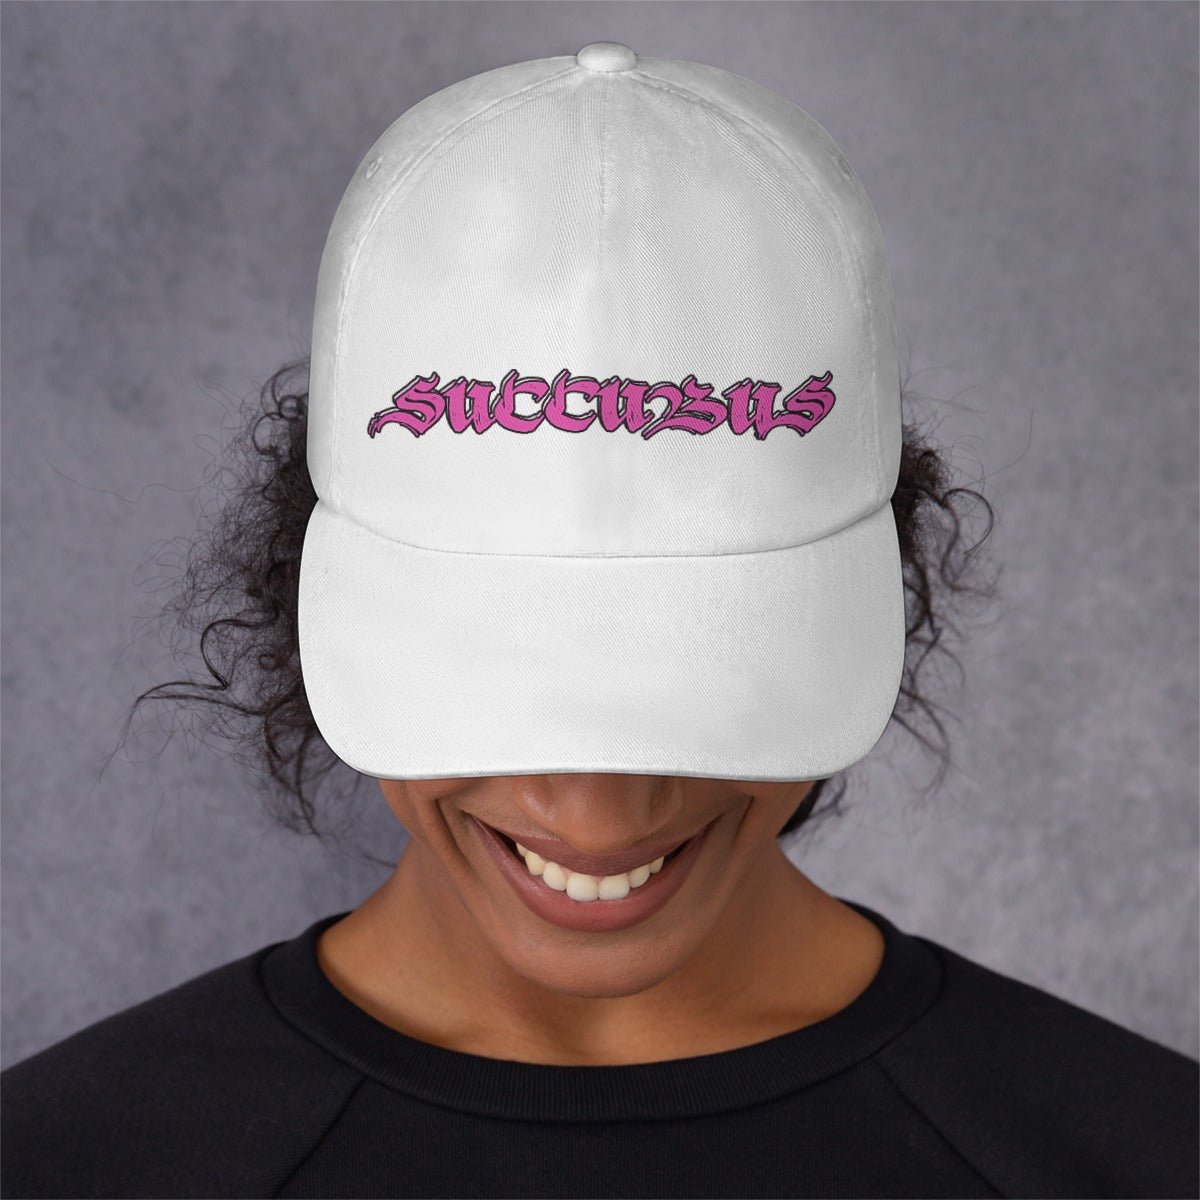 Succubus - Avatar Logo Dad Hat - dragqueenmerch